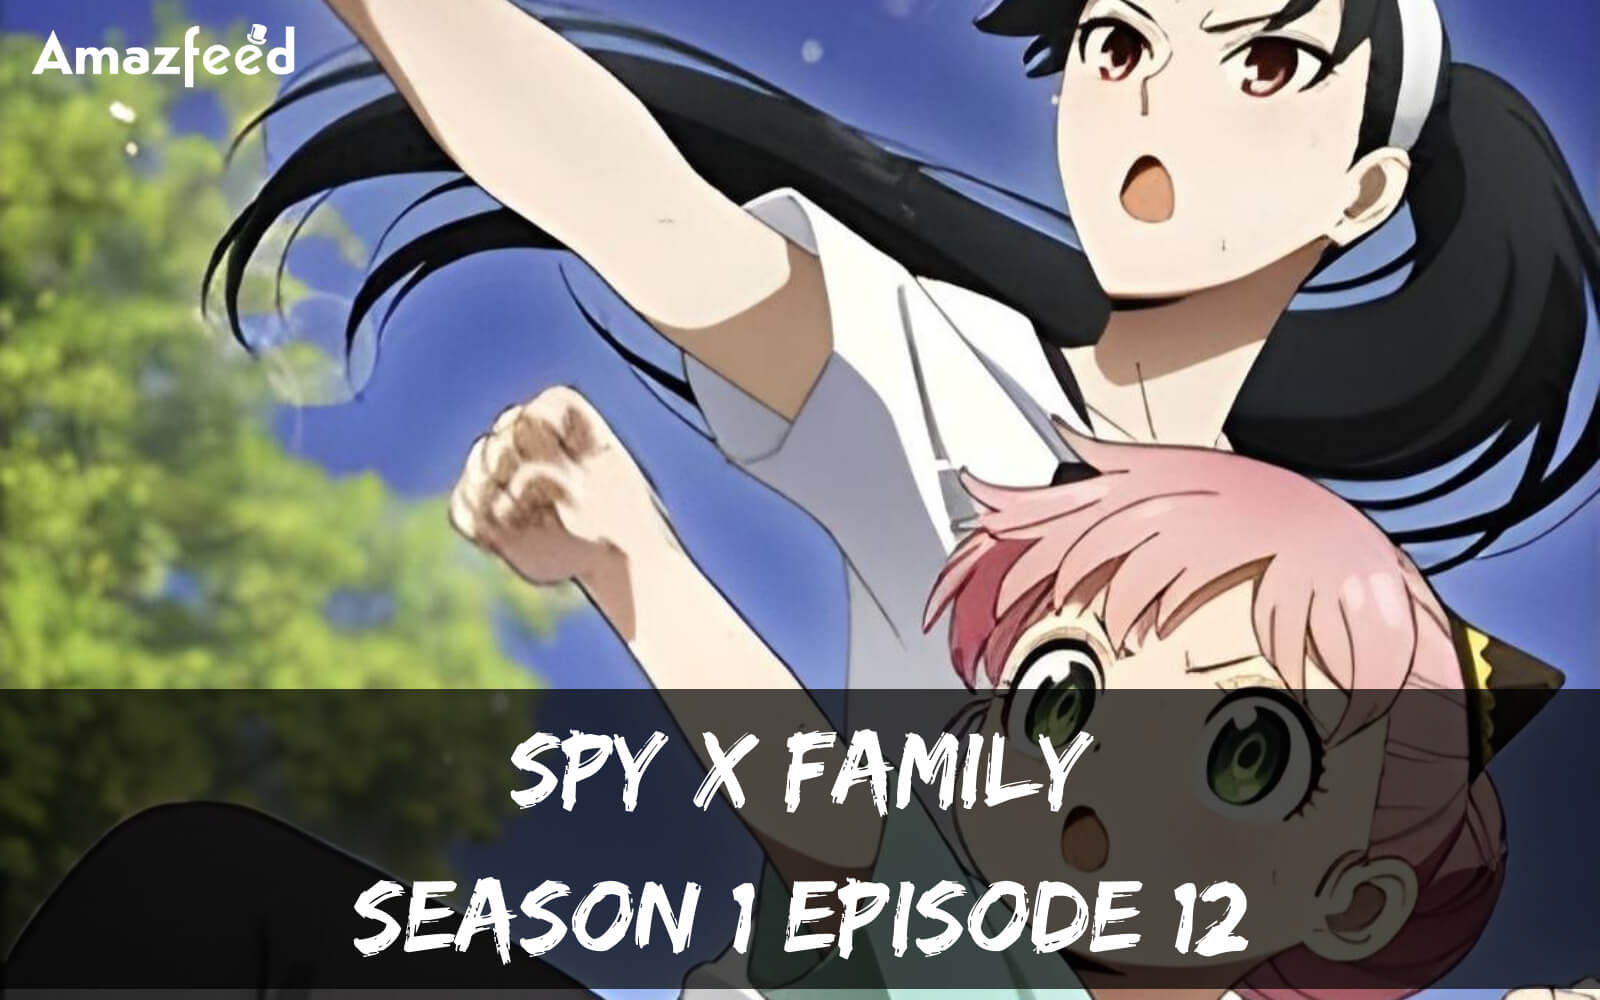 Spy x Family Season 1 Episode 12 release date